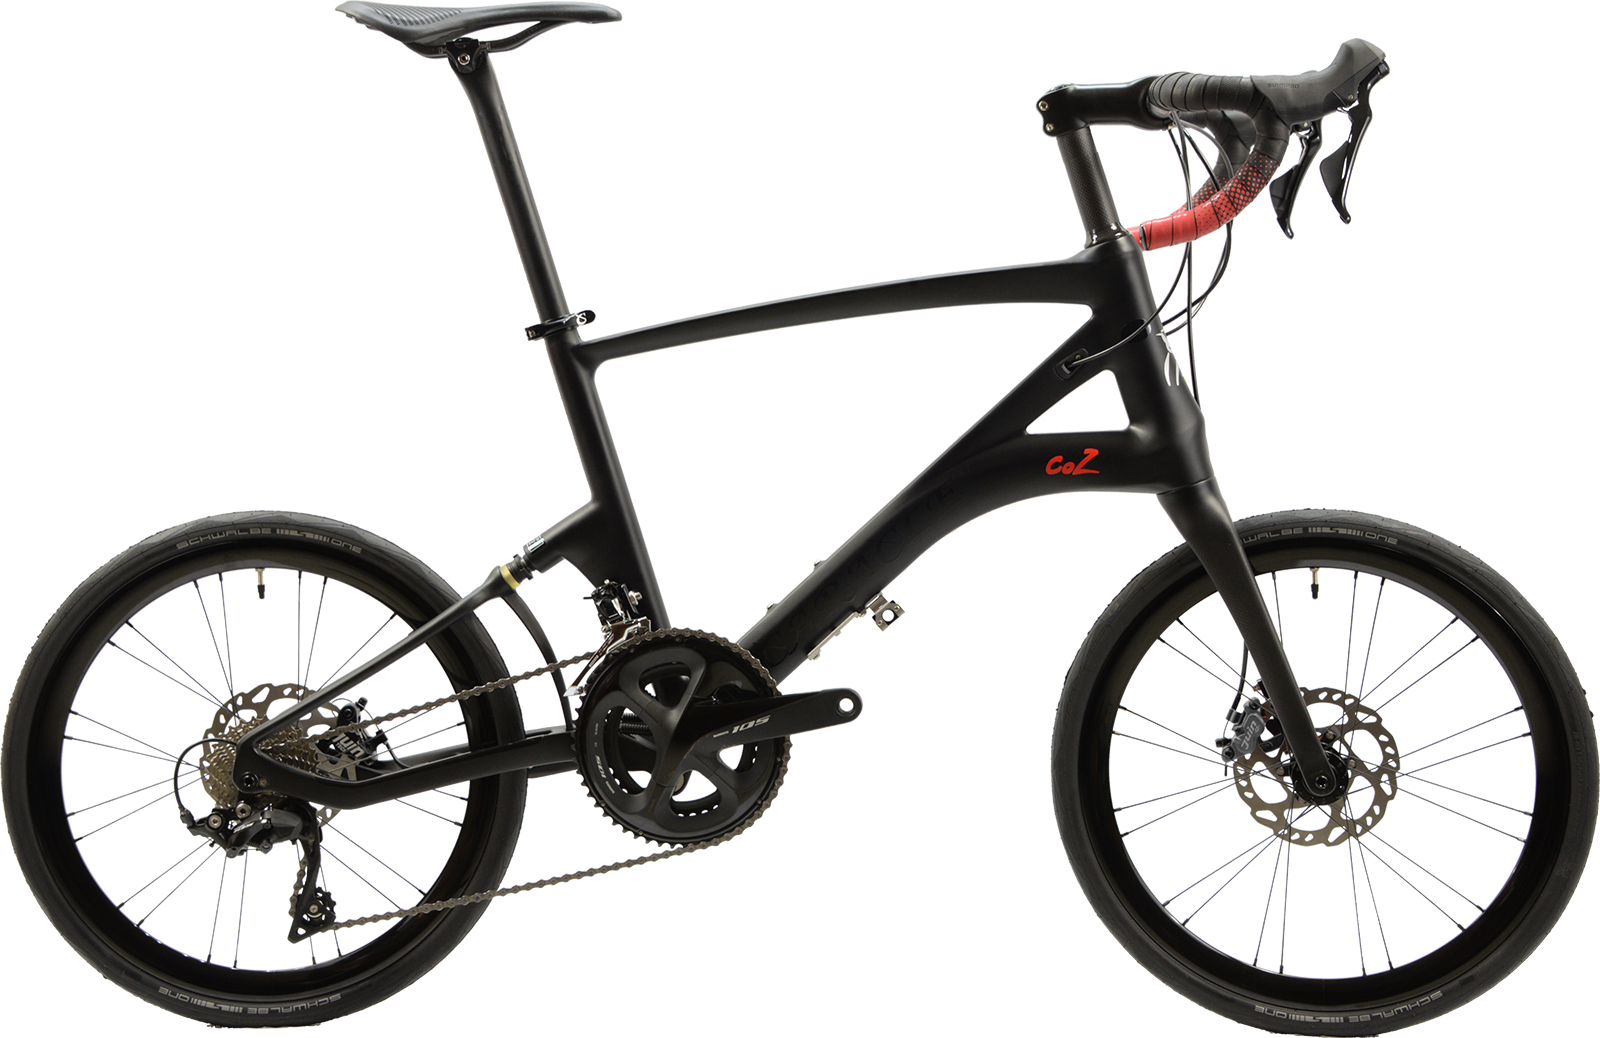 CARACLE-COZ – CARACLE -the innovative folding bike-